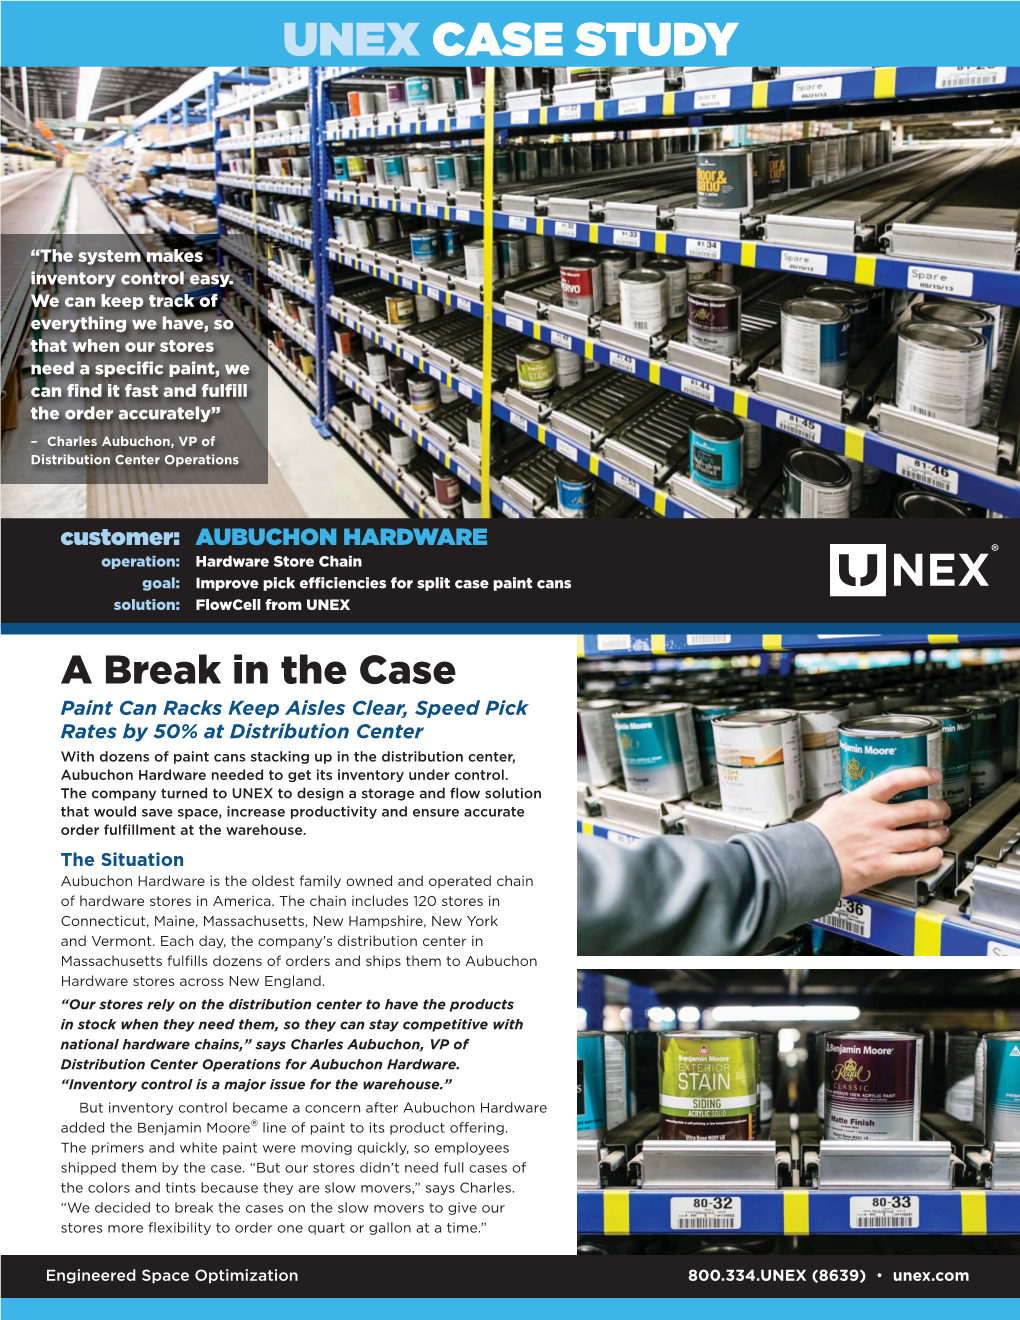 UNEX Aubuchon Hardware Case Study